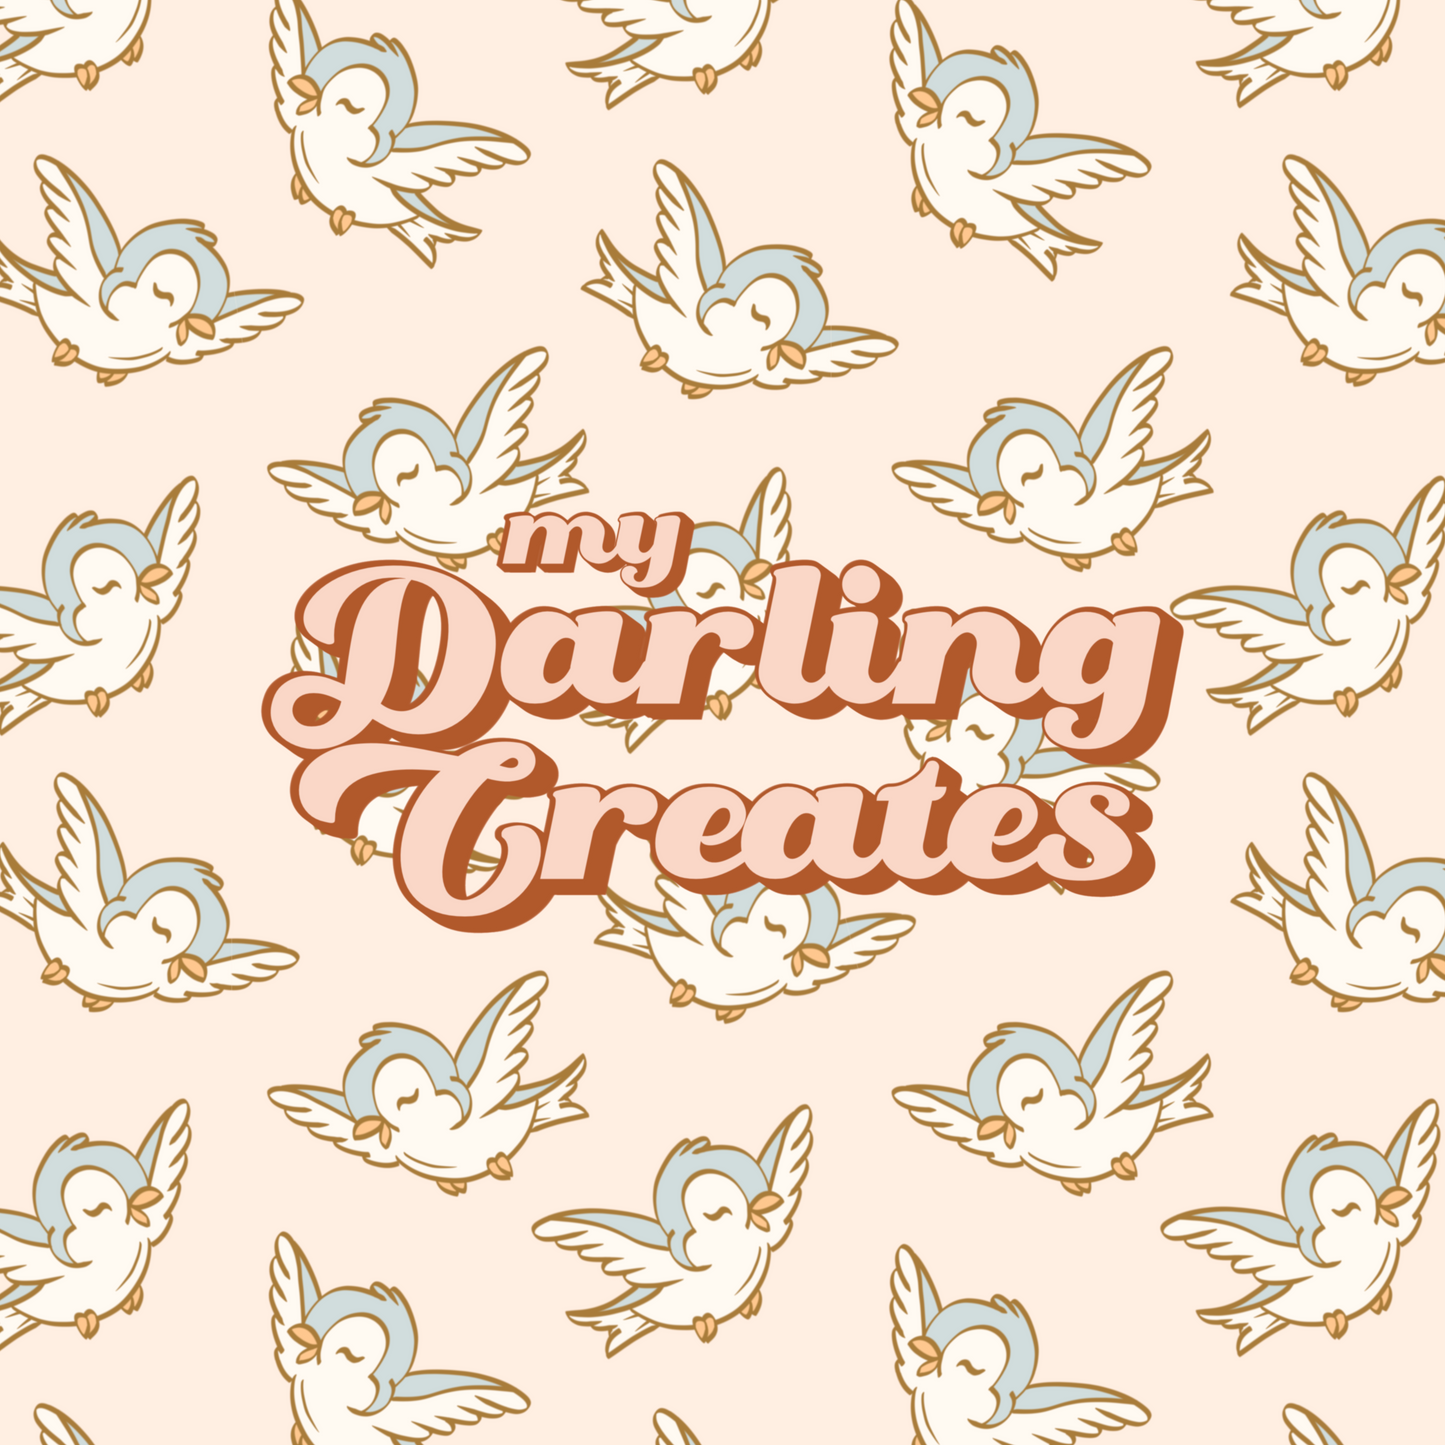 Darling Birds - Seamless Pattern